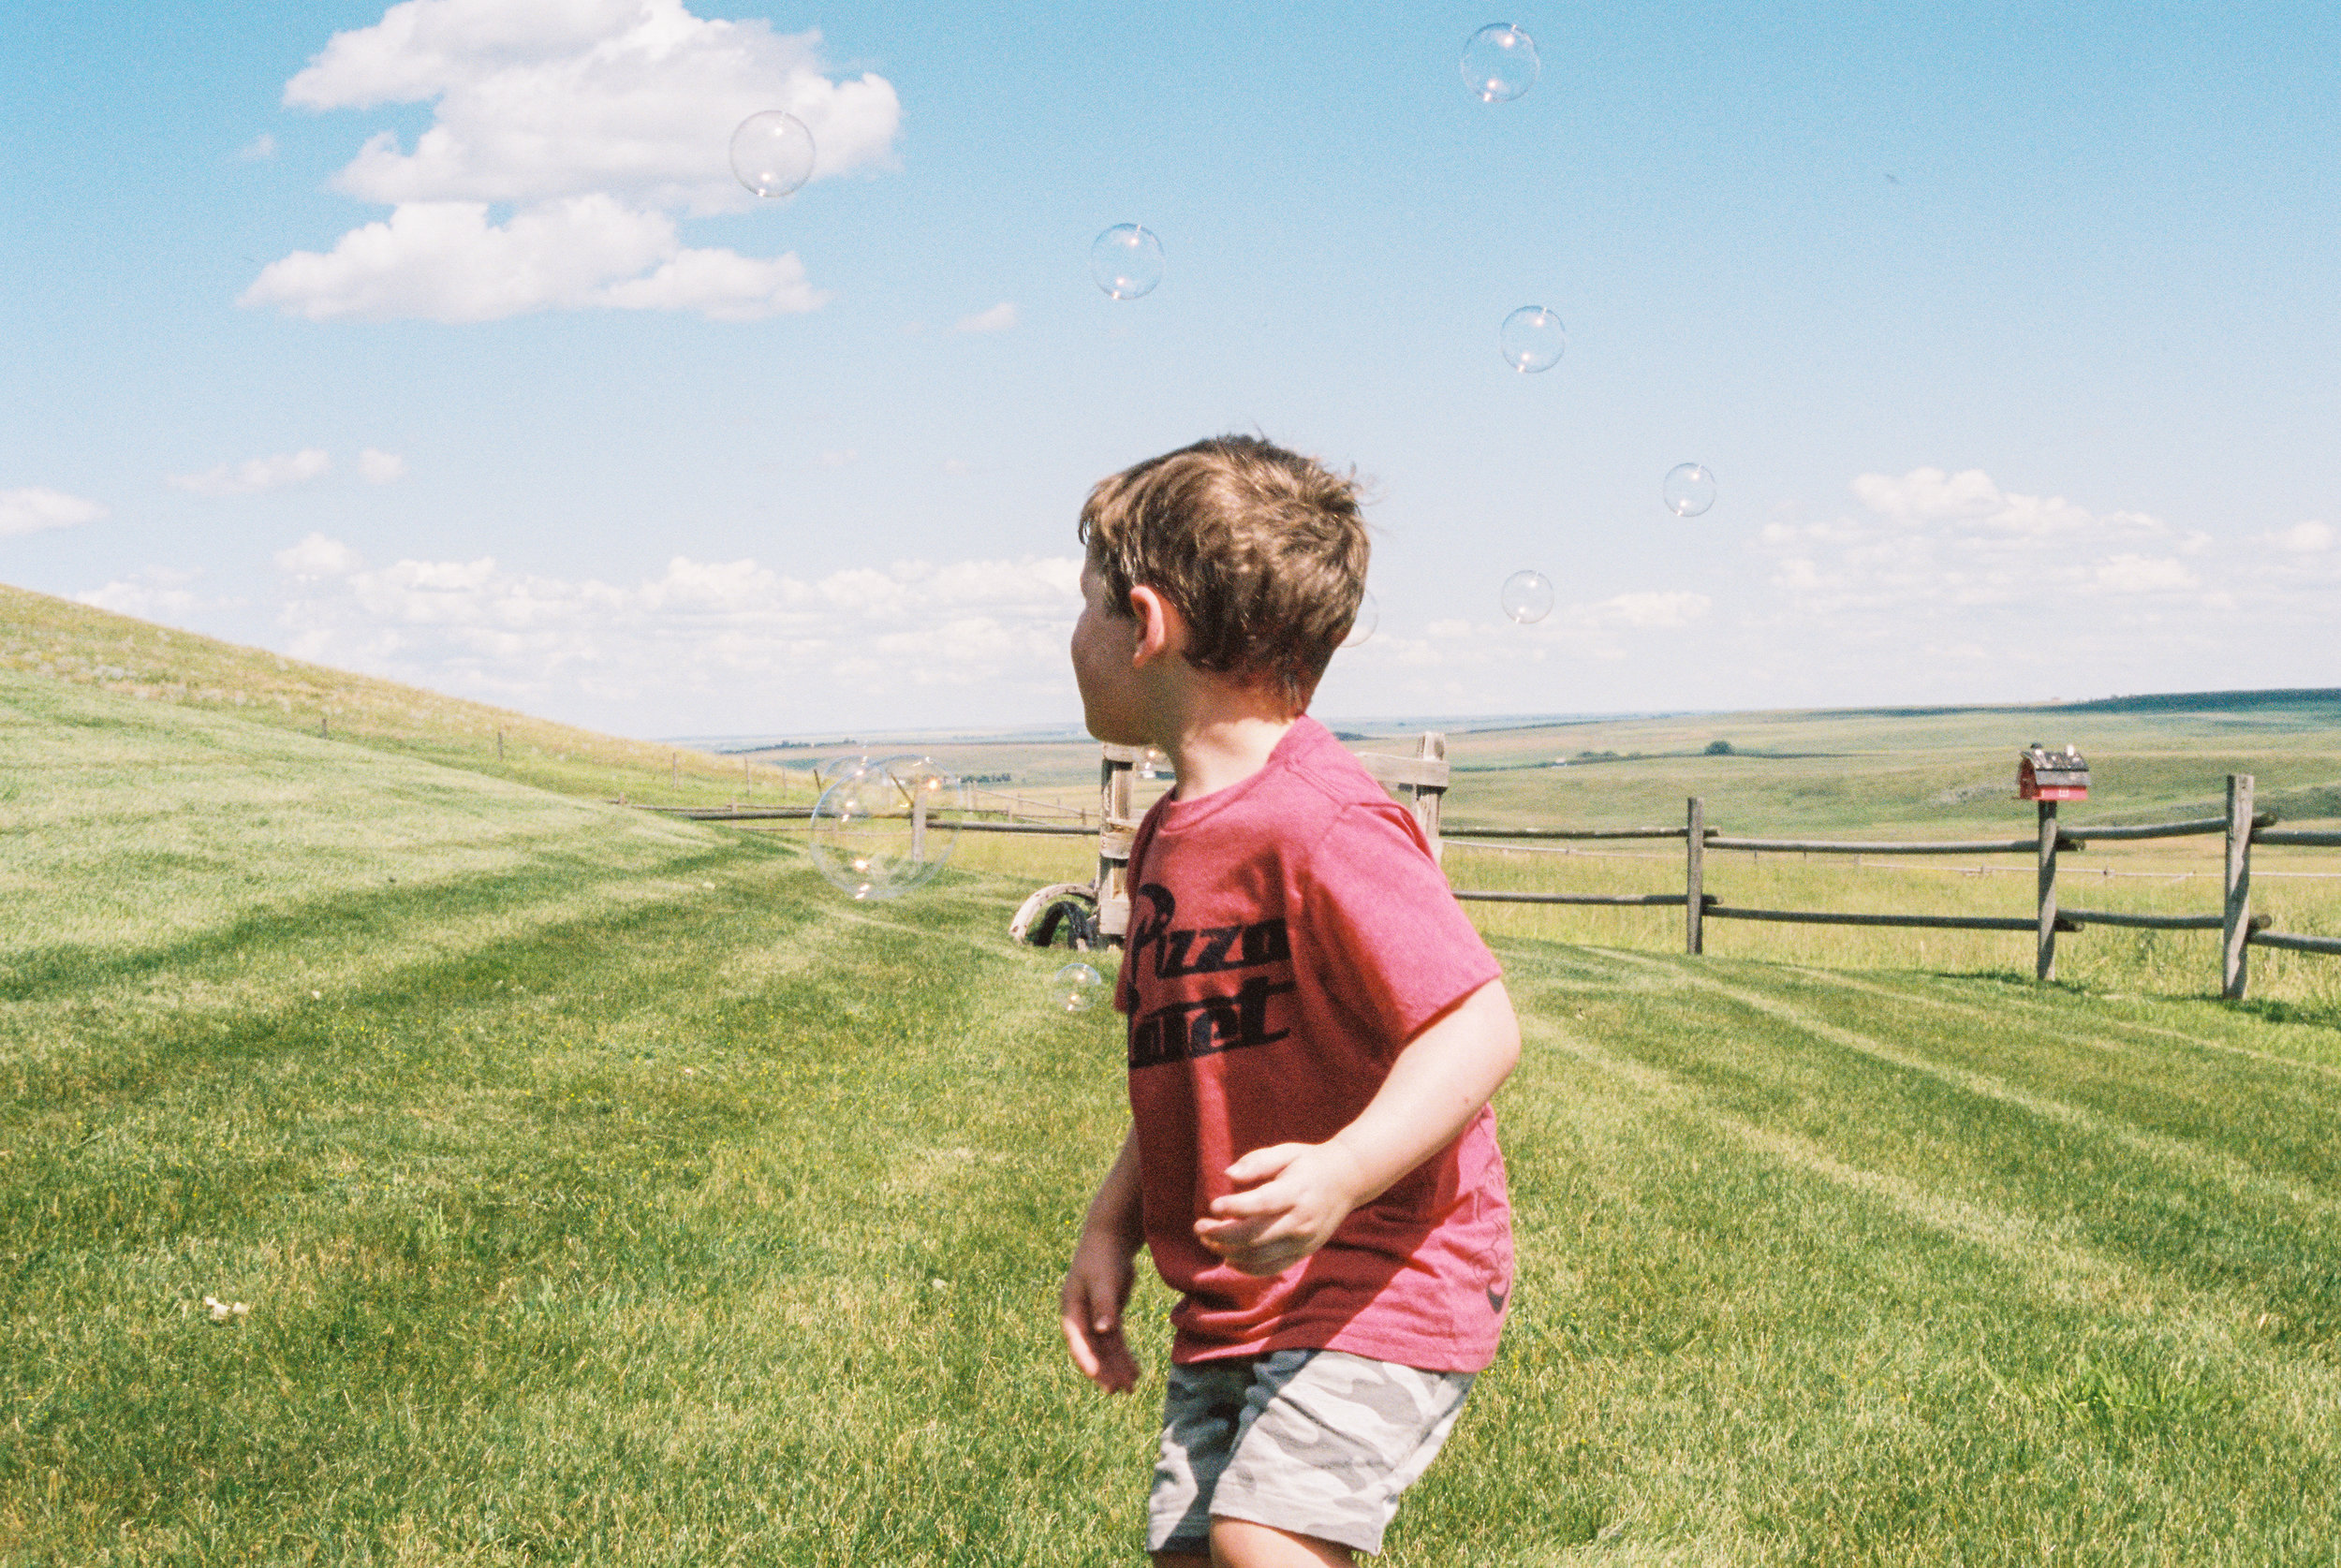  Jacob on the Farm in Calgary, Alberta. July 2019. 